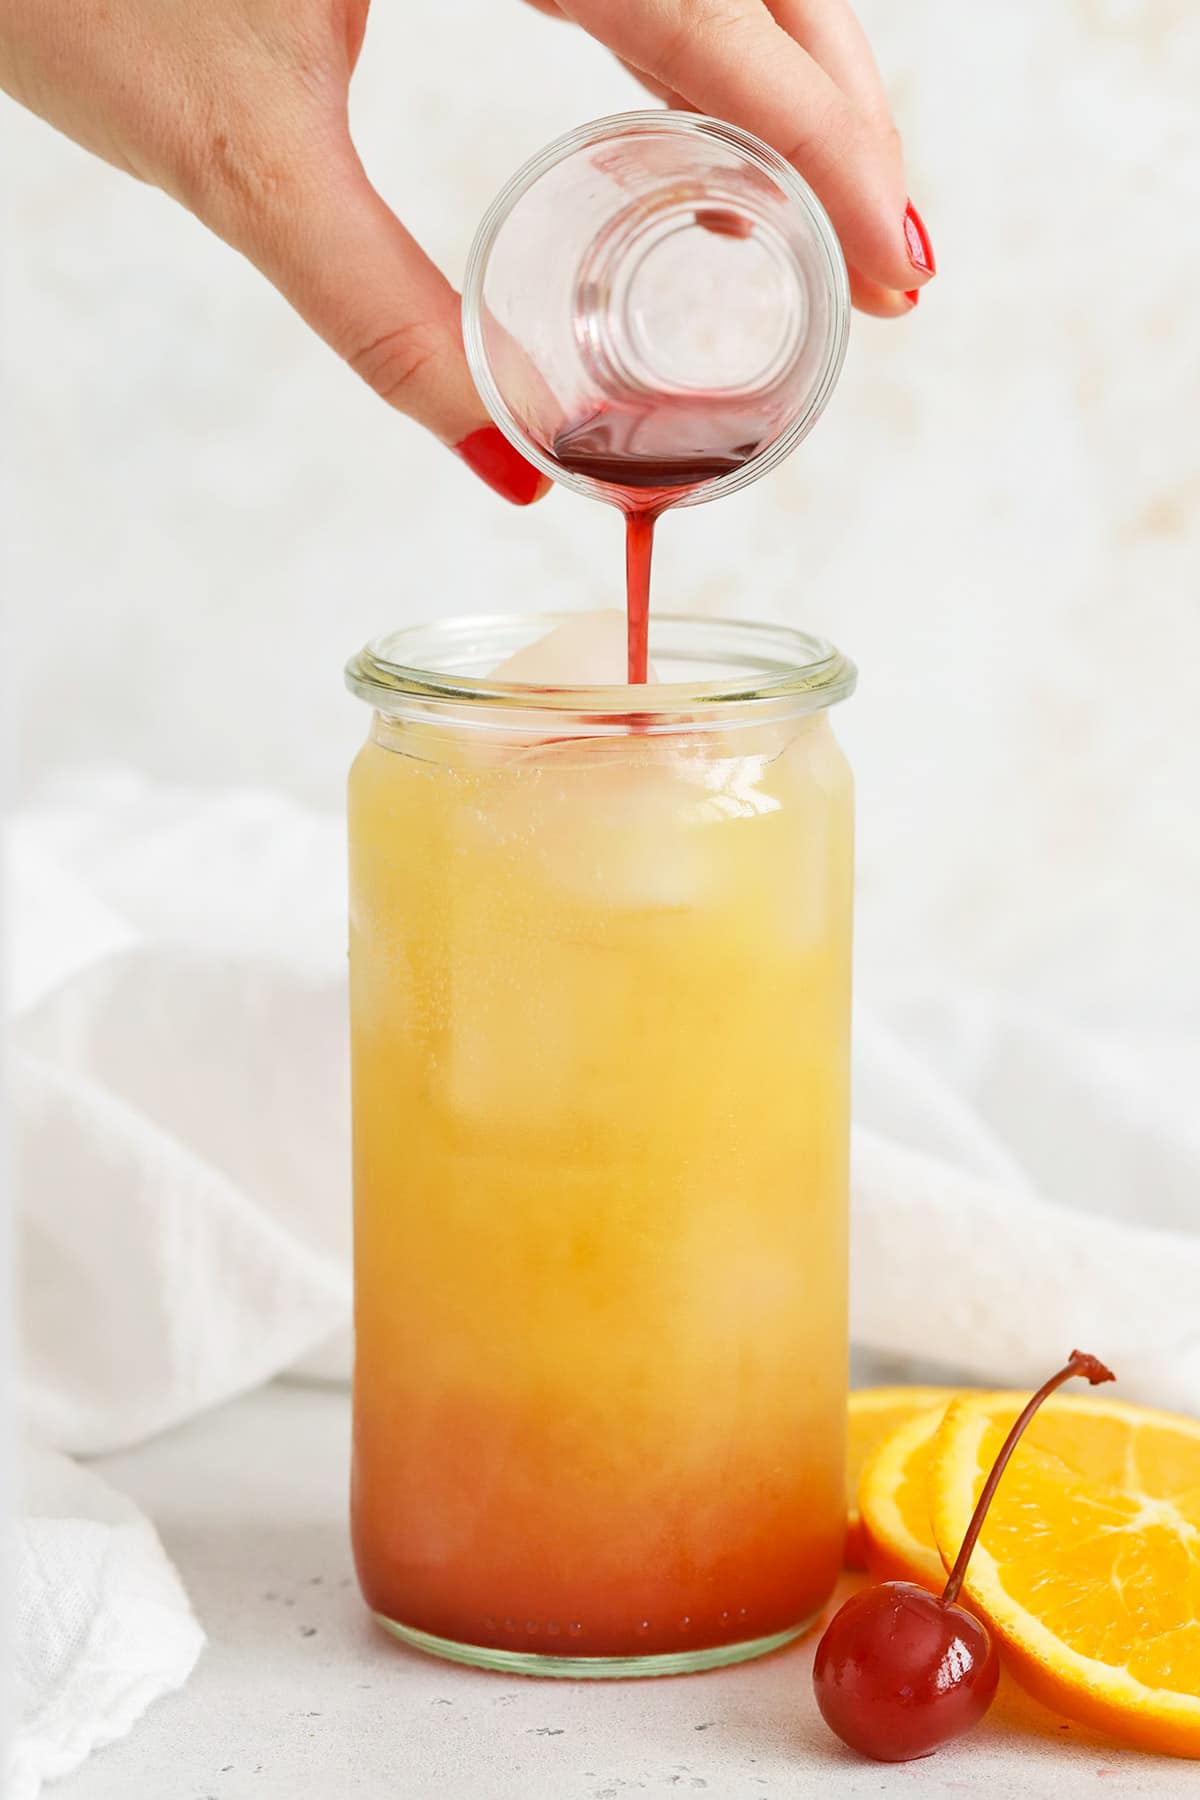 Pouring grenadine over orange juice to make a sweet sunrise mocktail